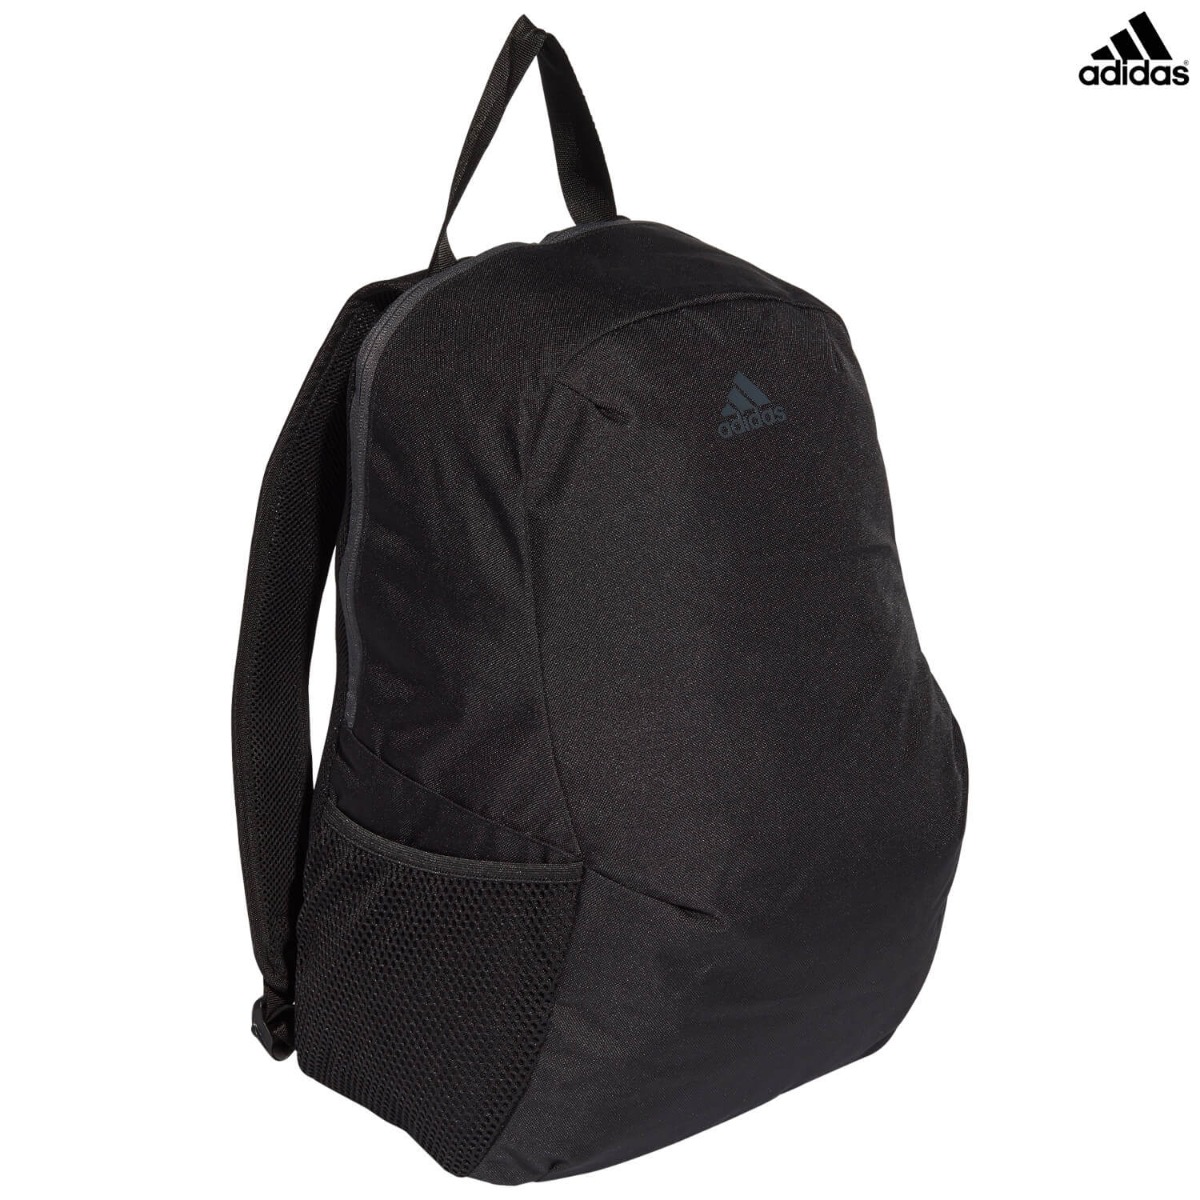 adidas Core Classic Backpack, black